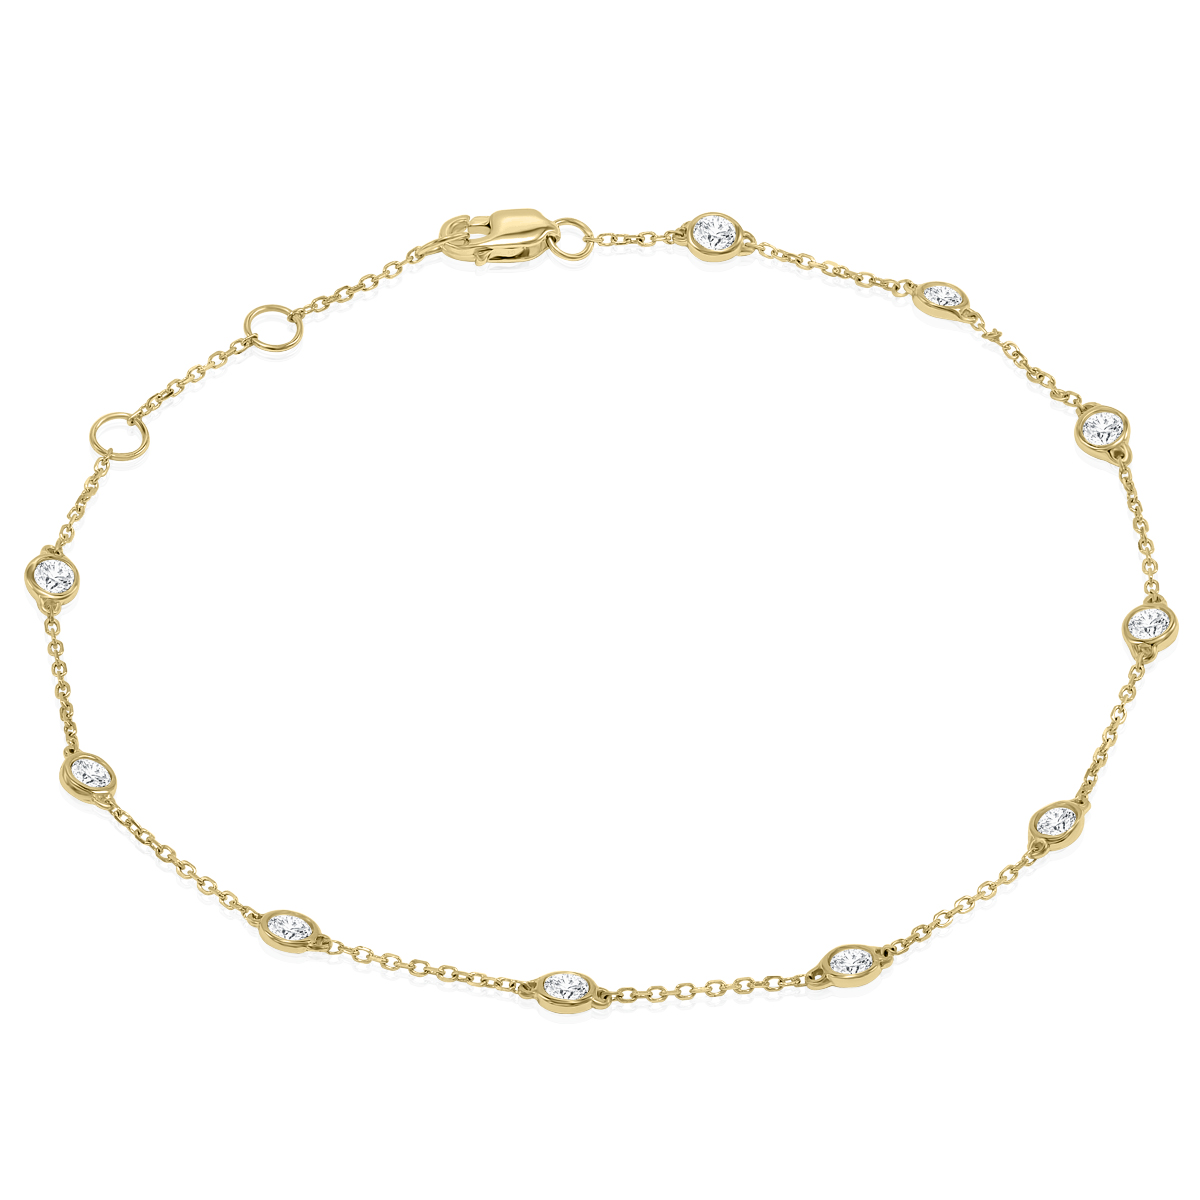 1/2 Carat TW Bezel Set Genuine Diamond Station Bracelet in 14K Yellow Gold